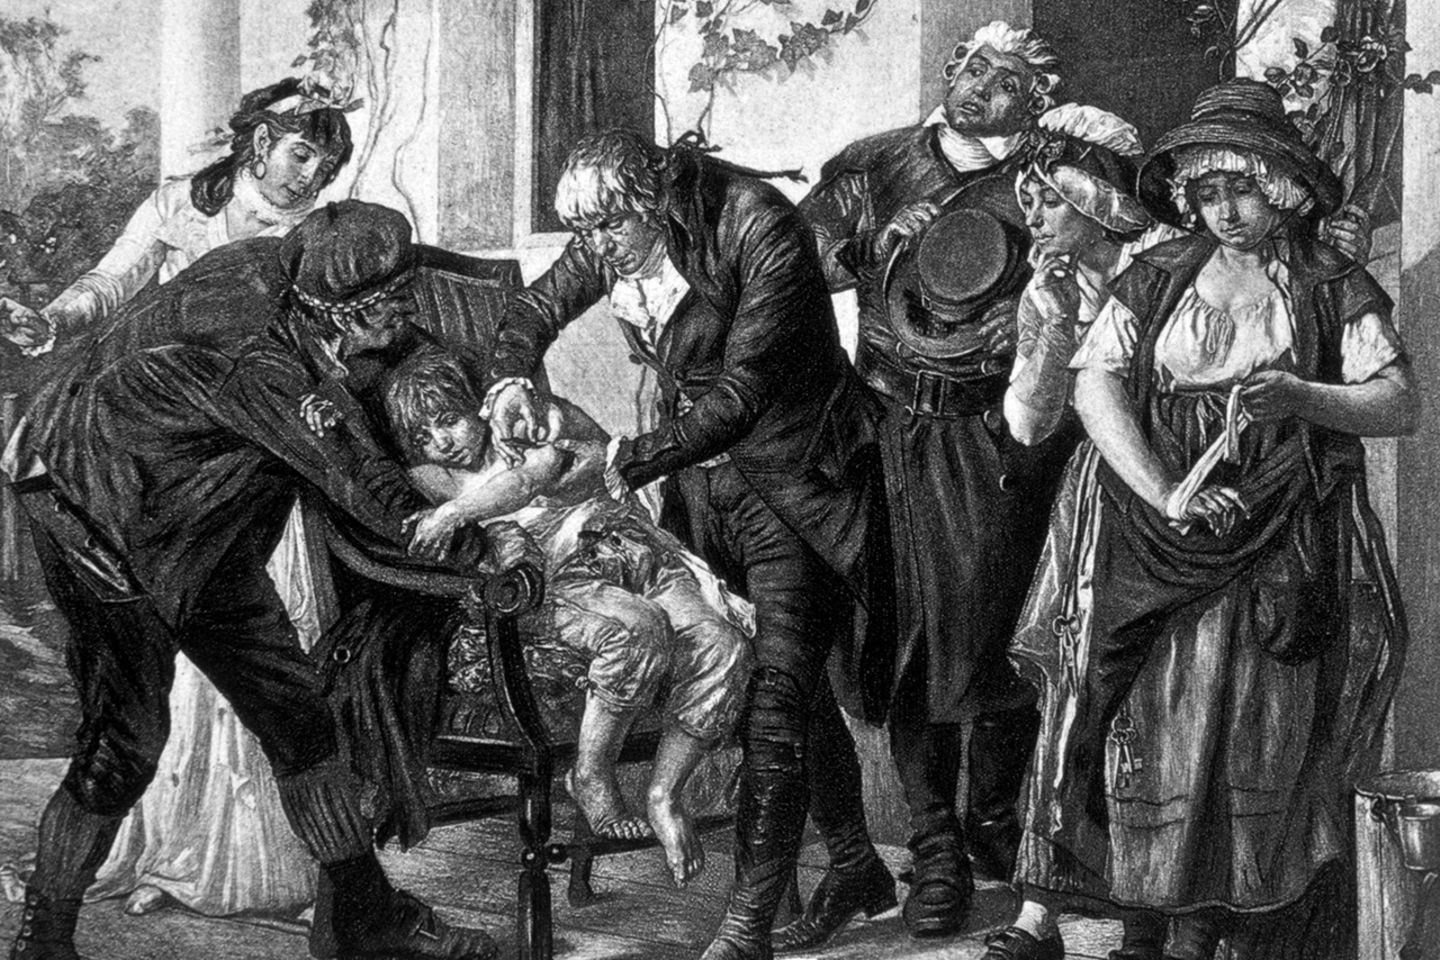 Englische Landarzt Edward Jenner impfte James Phipps mit Kuhpockenmaterie - Ausstellung im DomQuartier